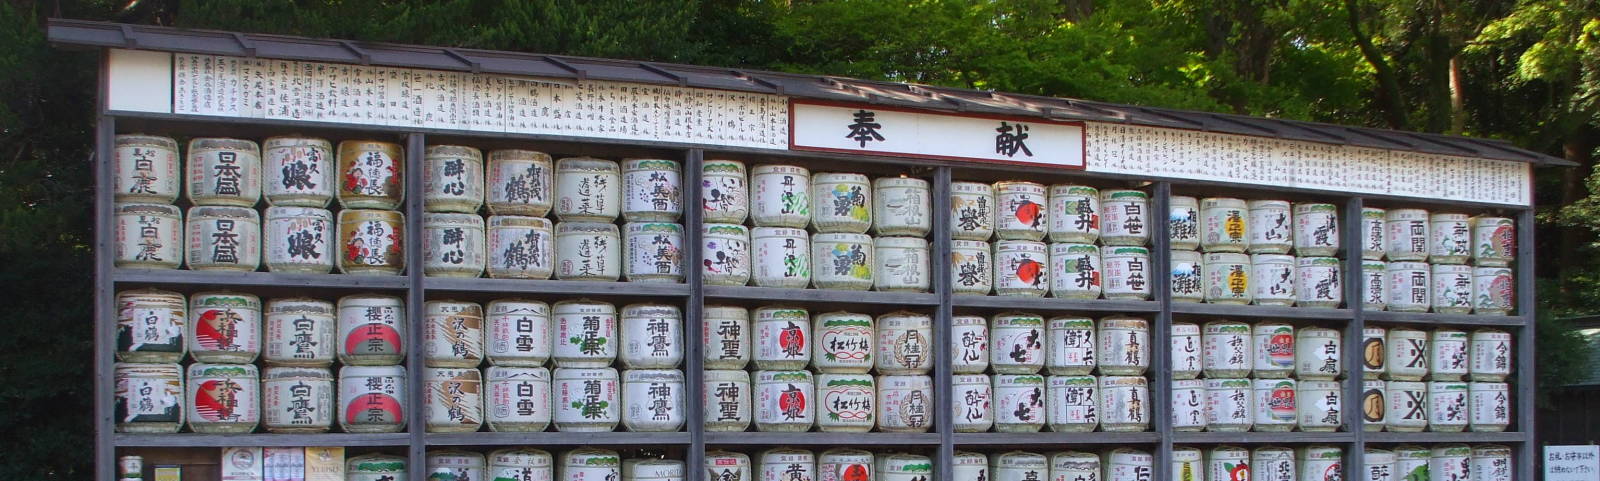 Sake barrels at Tsurugaoka Hachiman-gū in Kamakura.